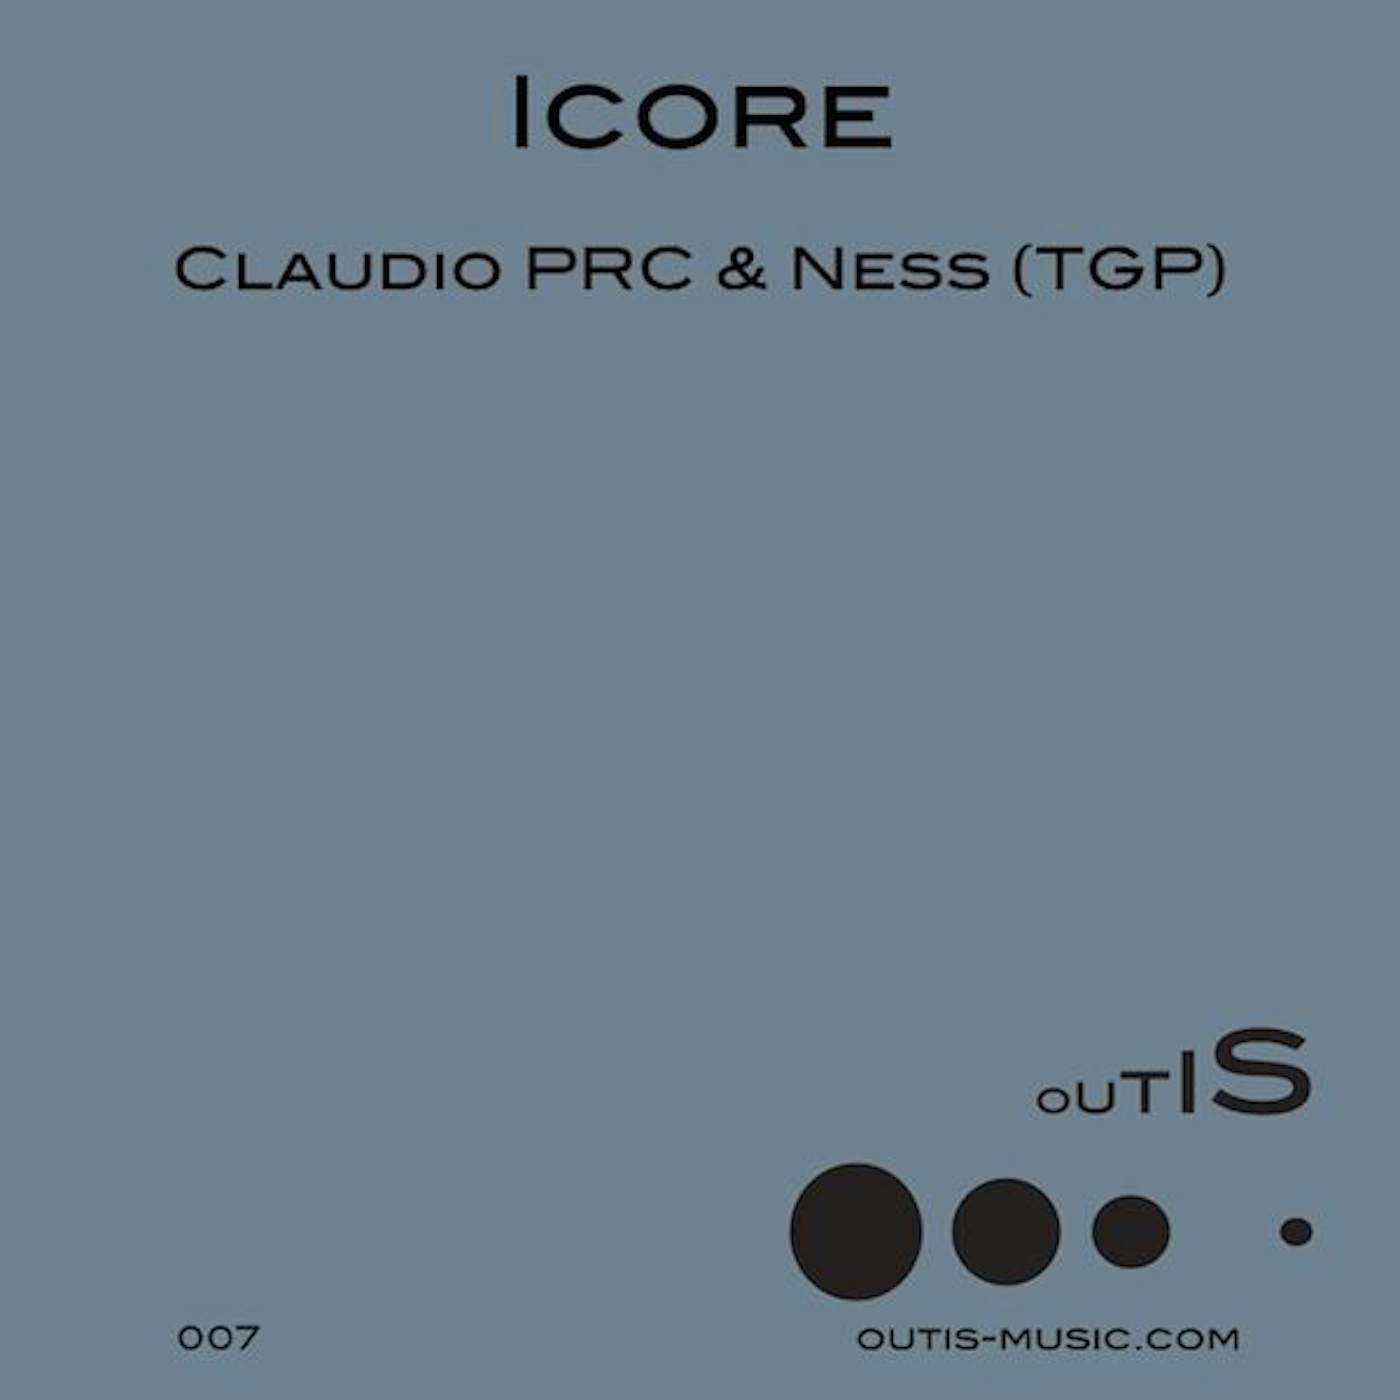 Claudio PRC Icore Vinyl Record